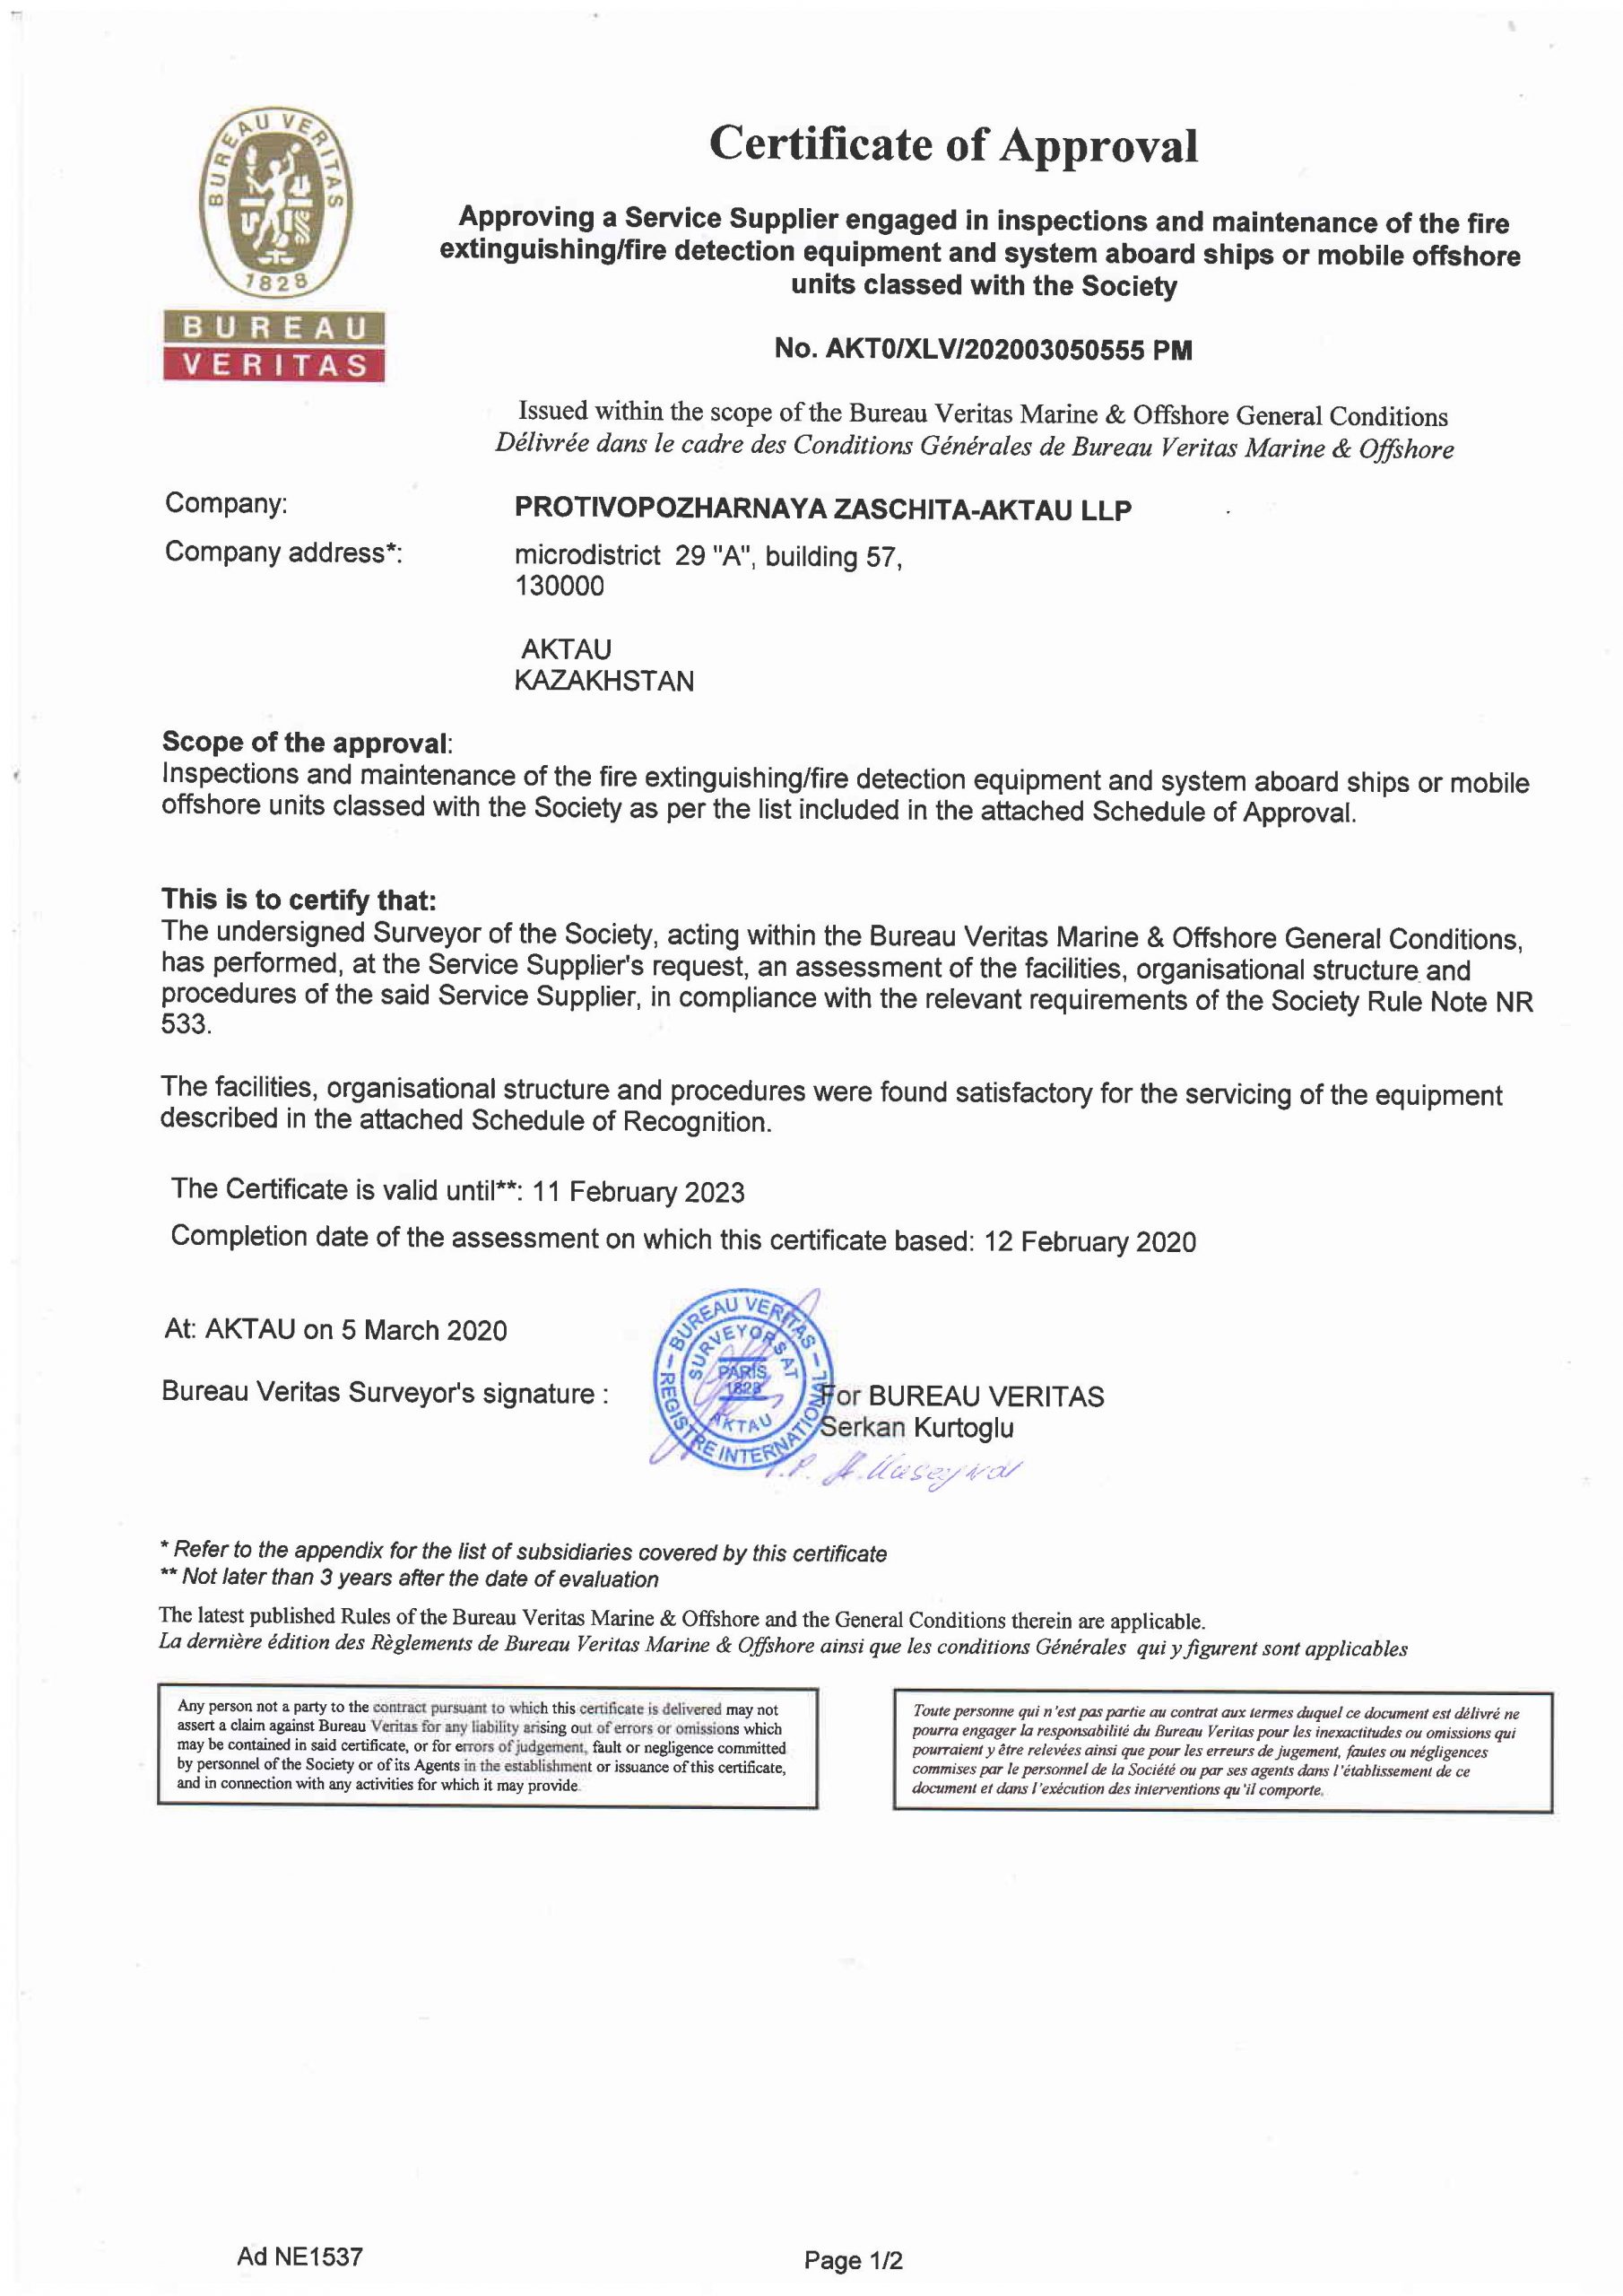 BV - Certificate Approval